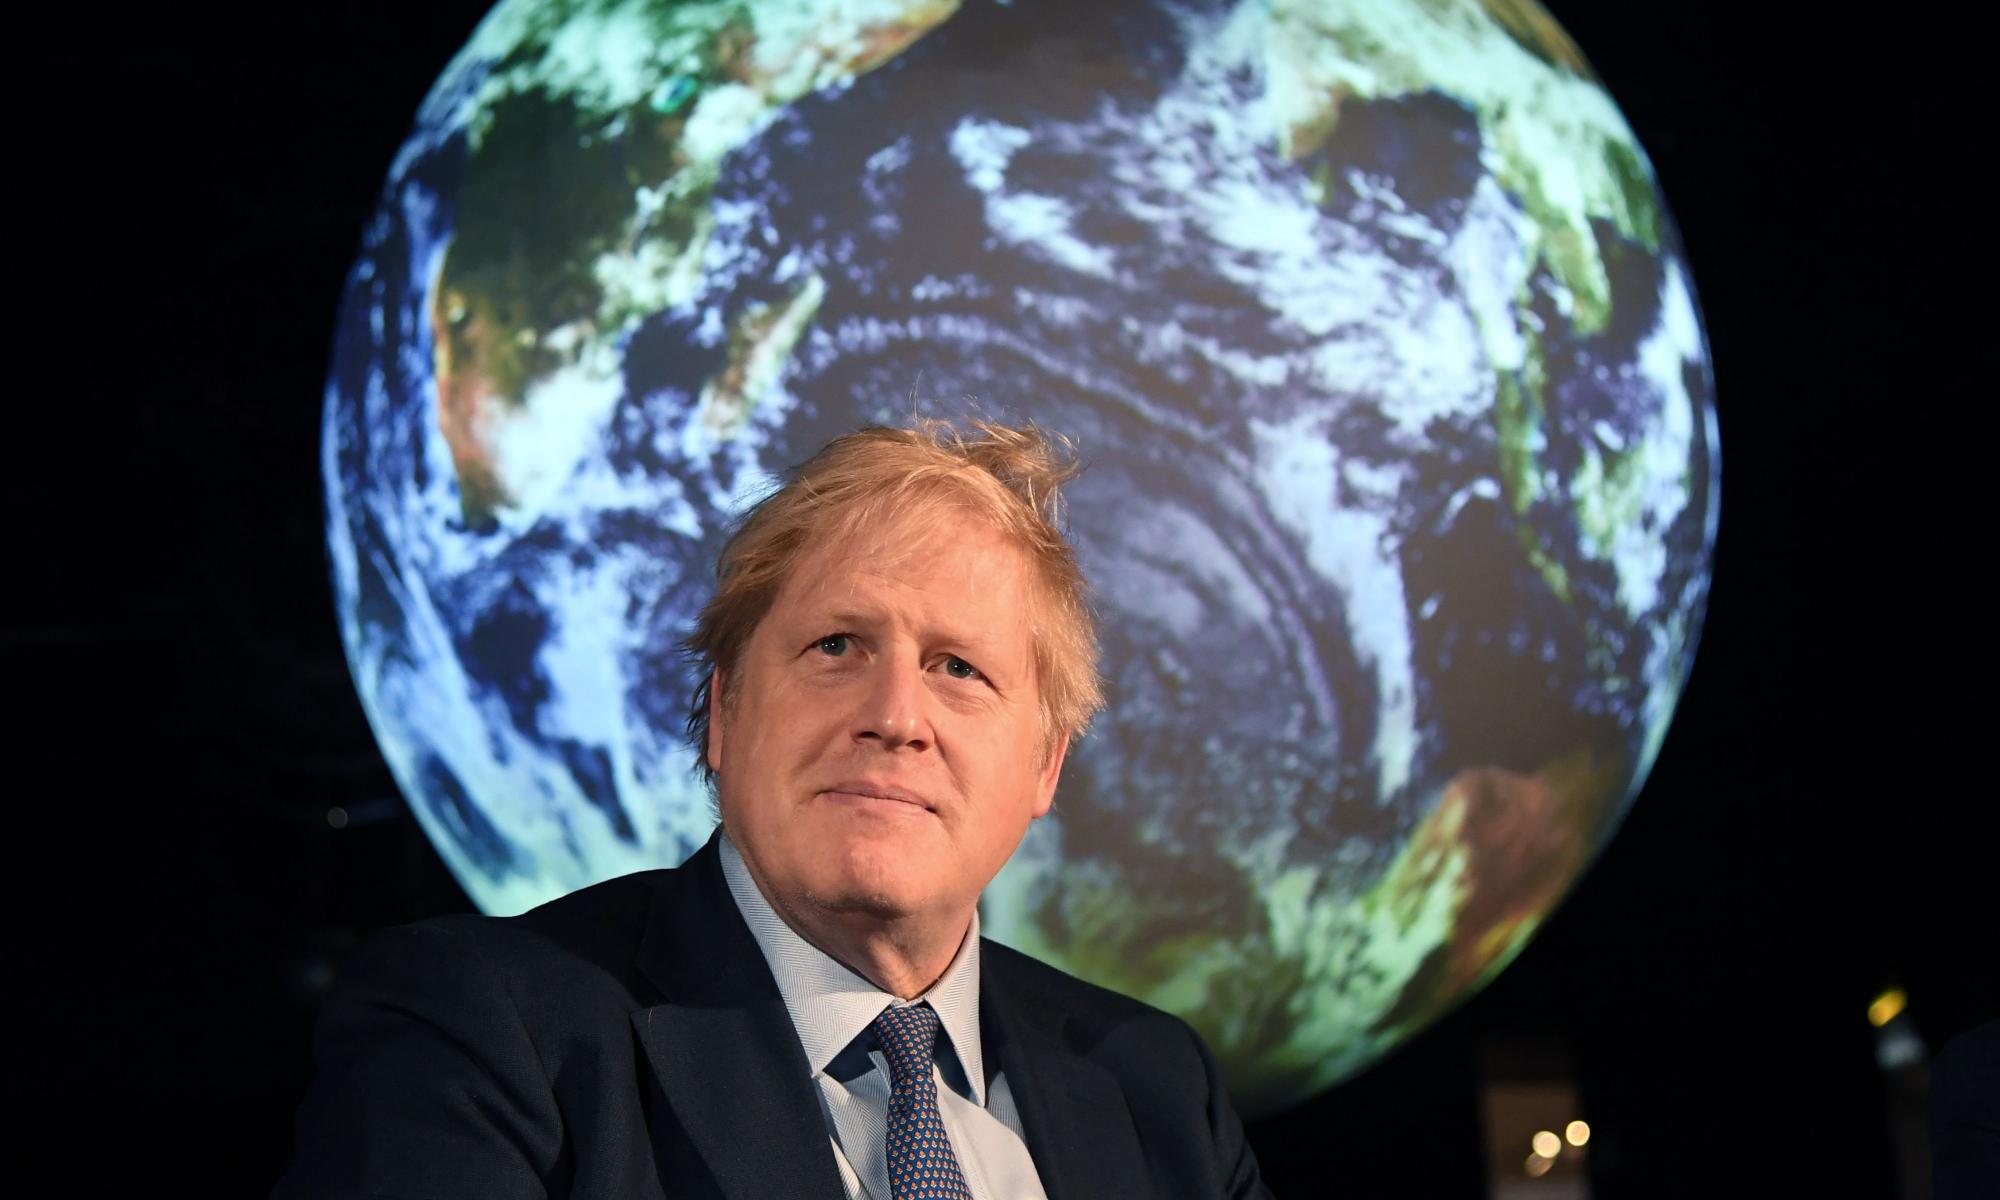 Boris Johnson urged to speak out against climate deniers